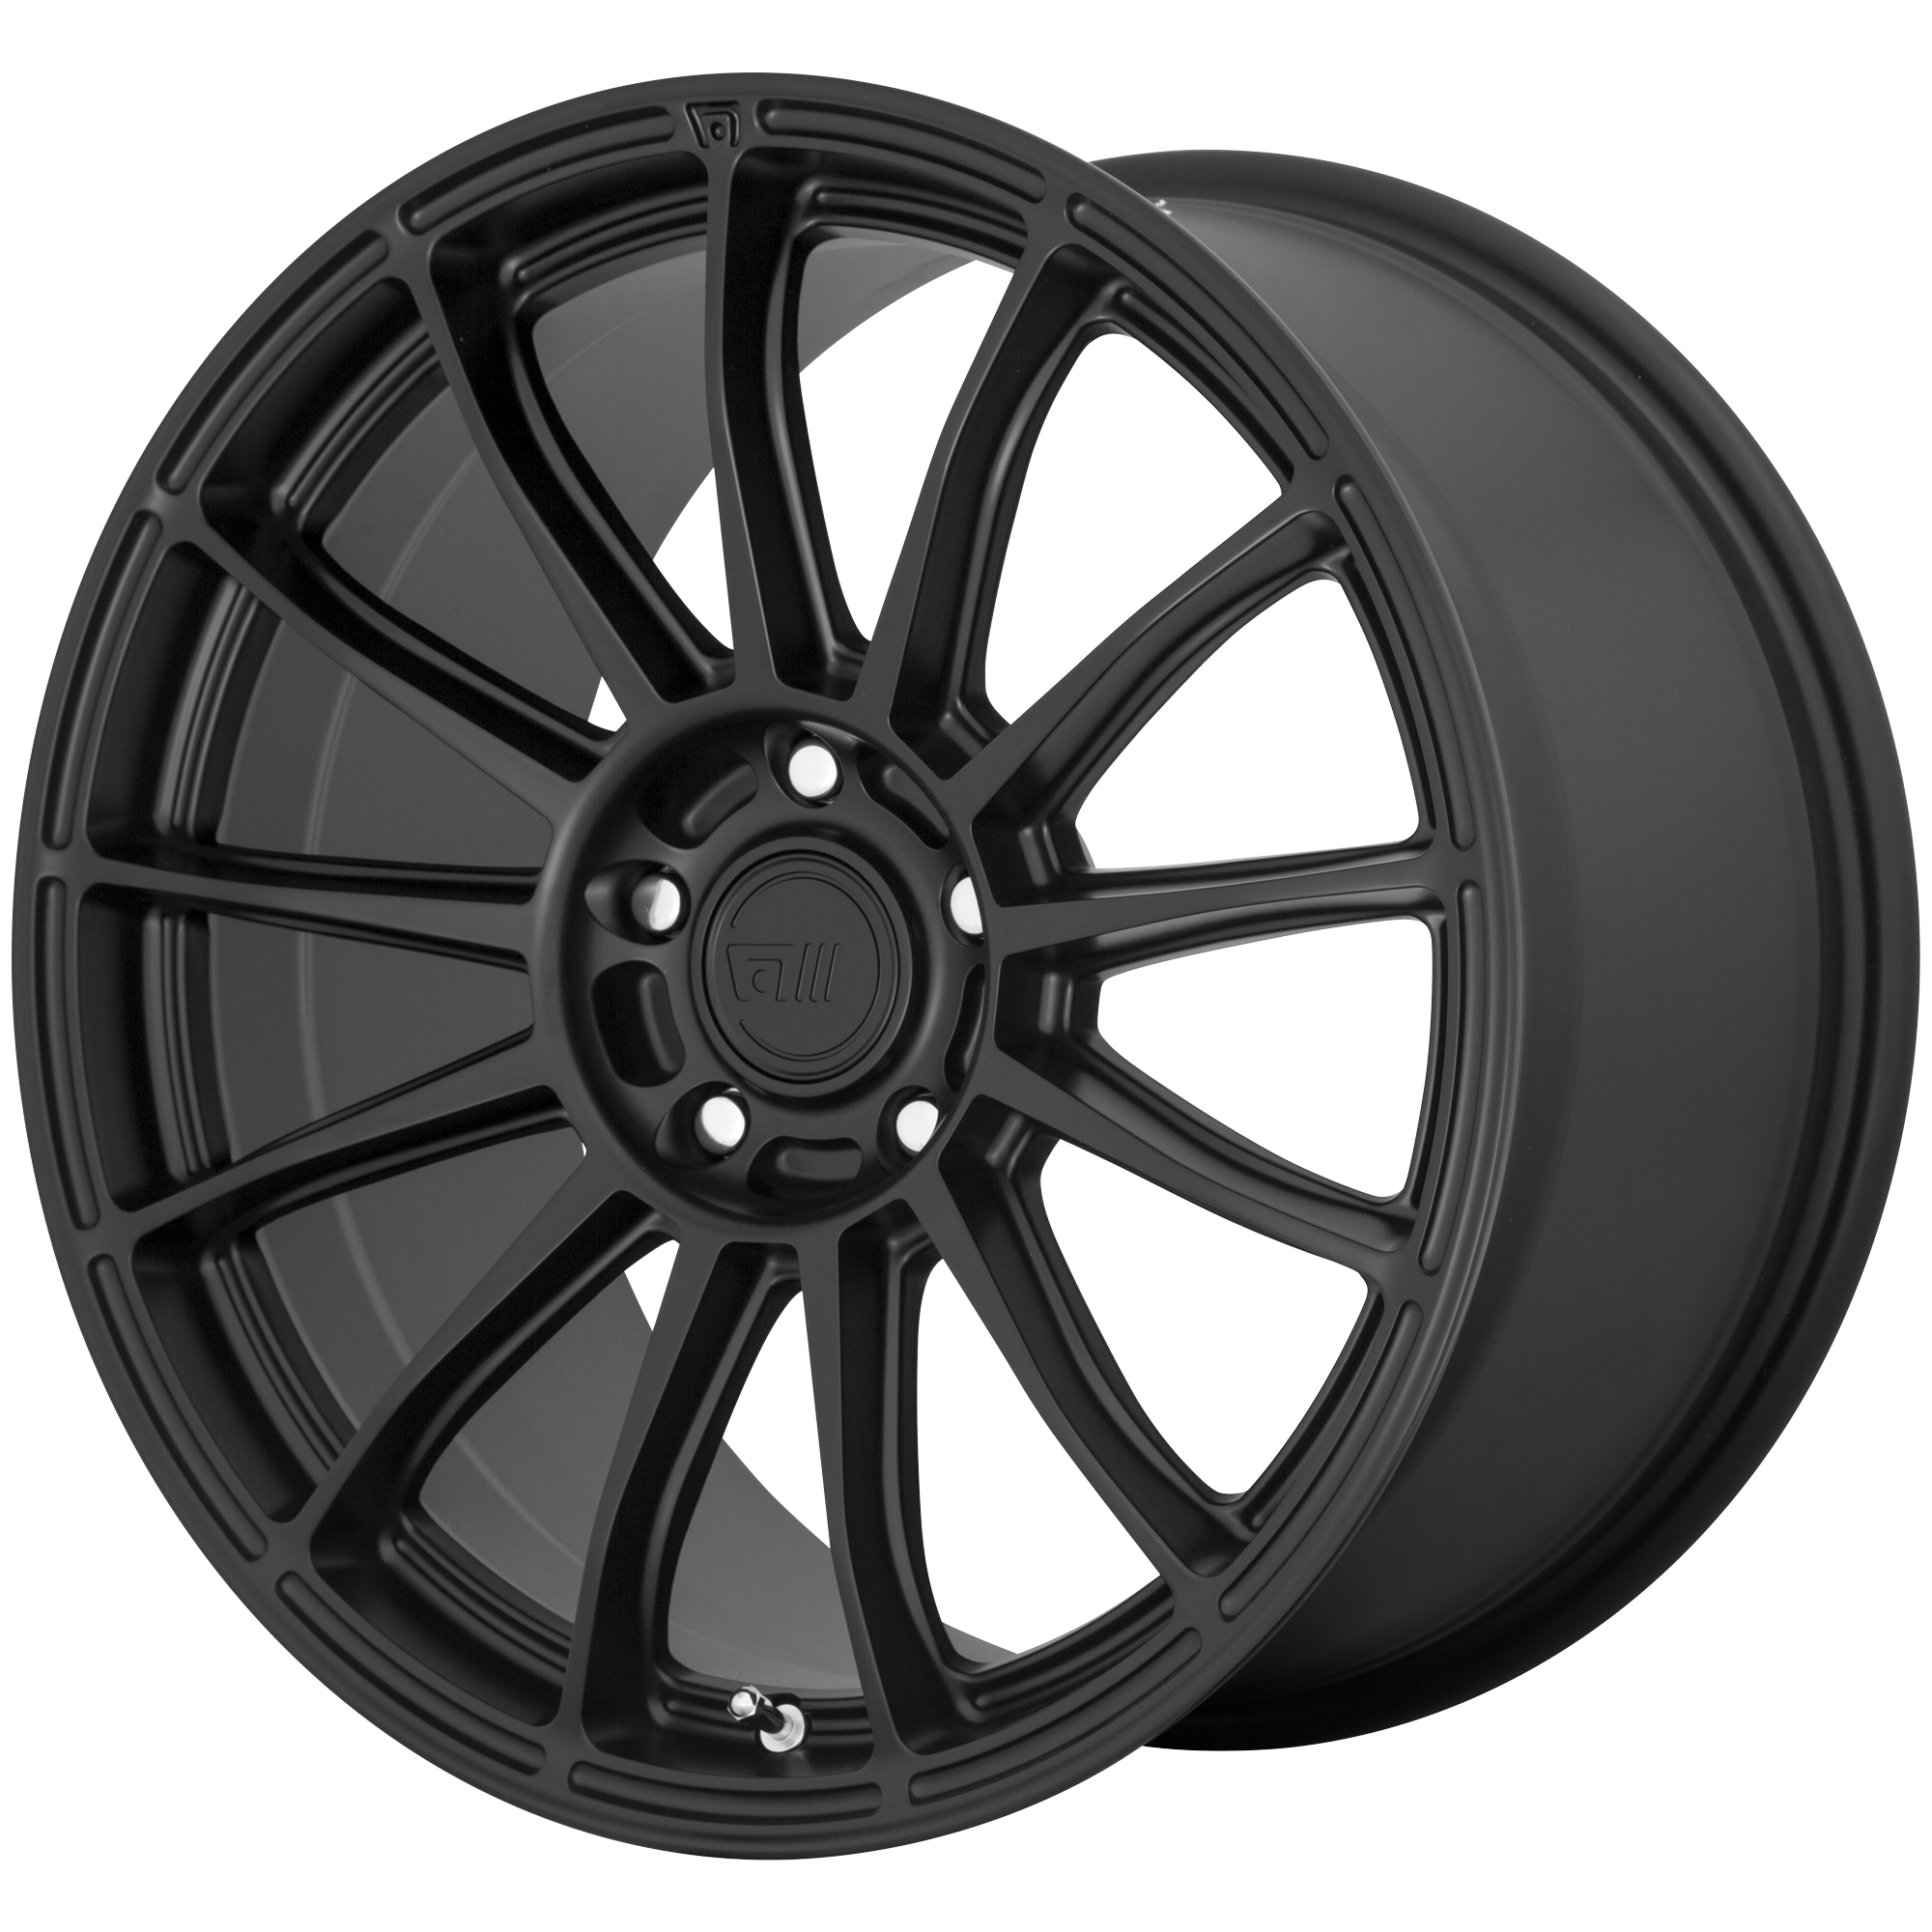 CS13 18x8.5 5x114.30 SATIN BLACK (35 mm) - Tires and Engine Performance